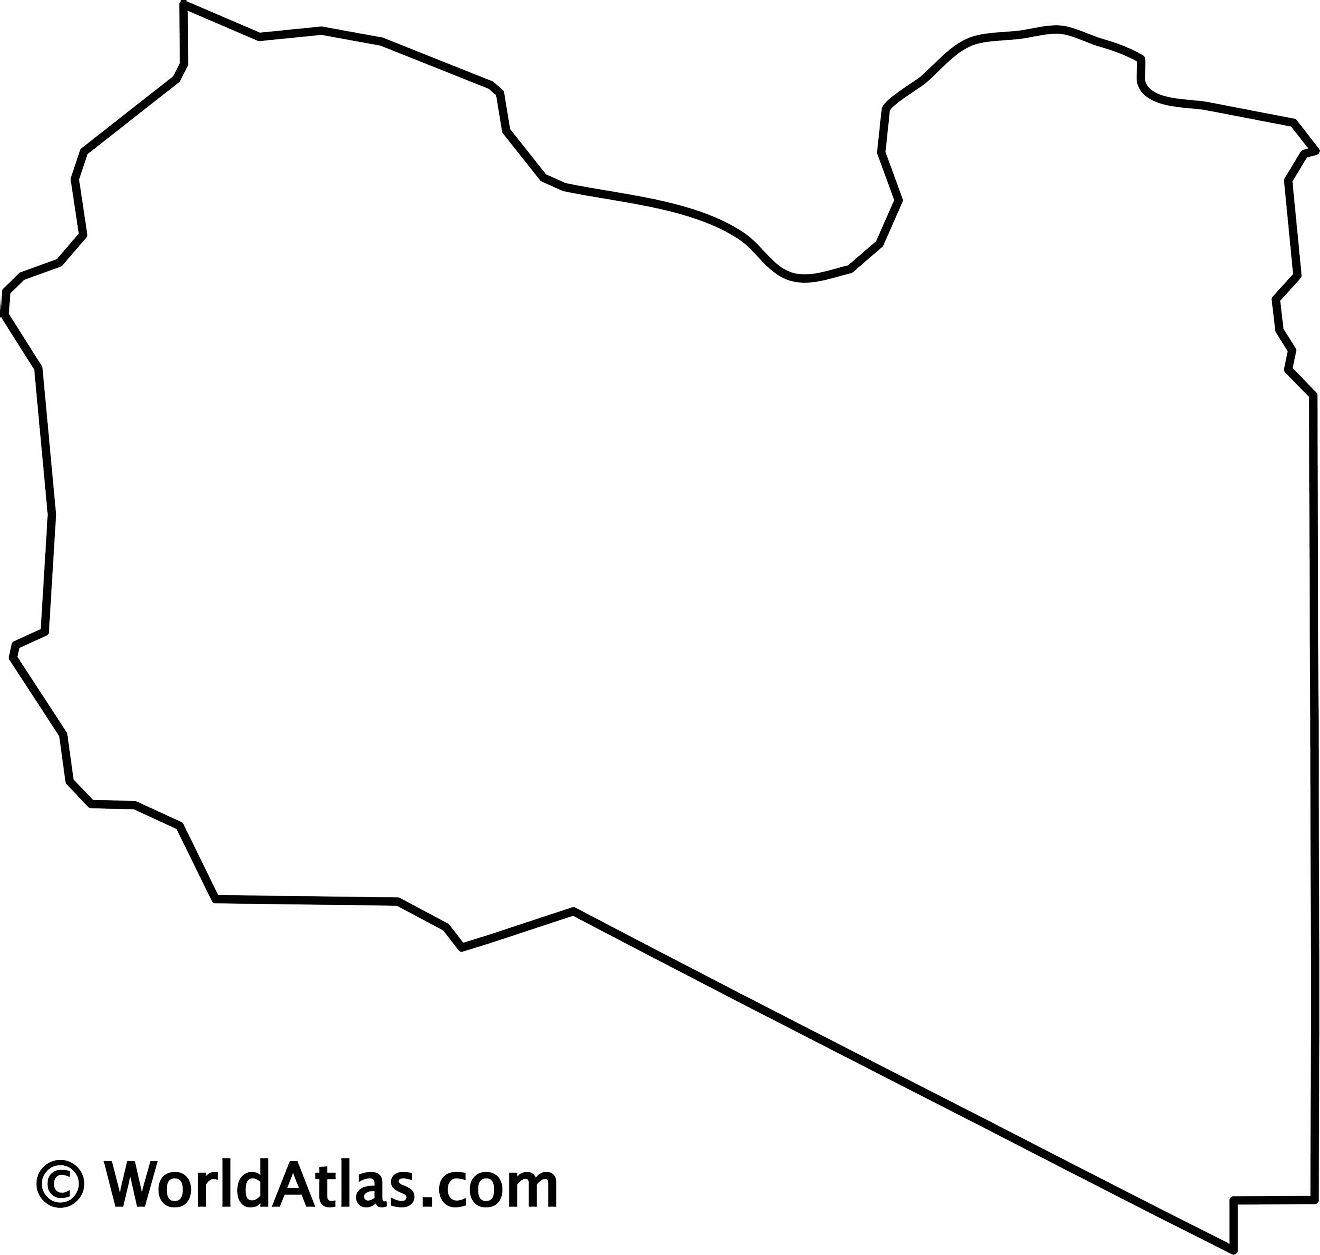 Blank Outline Map of Libya